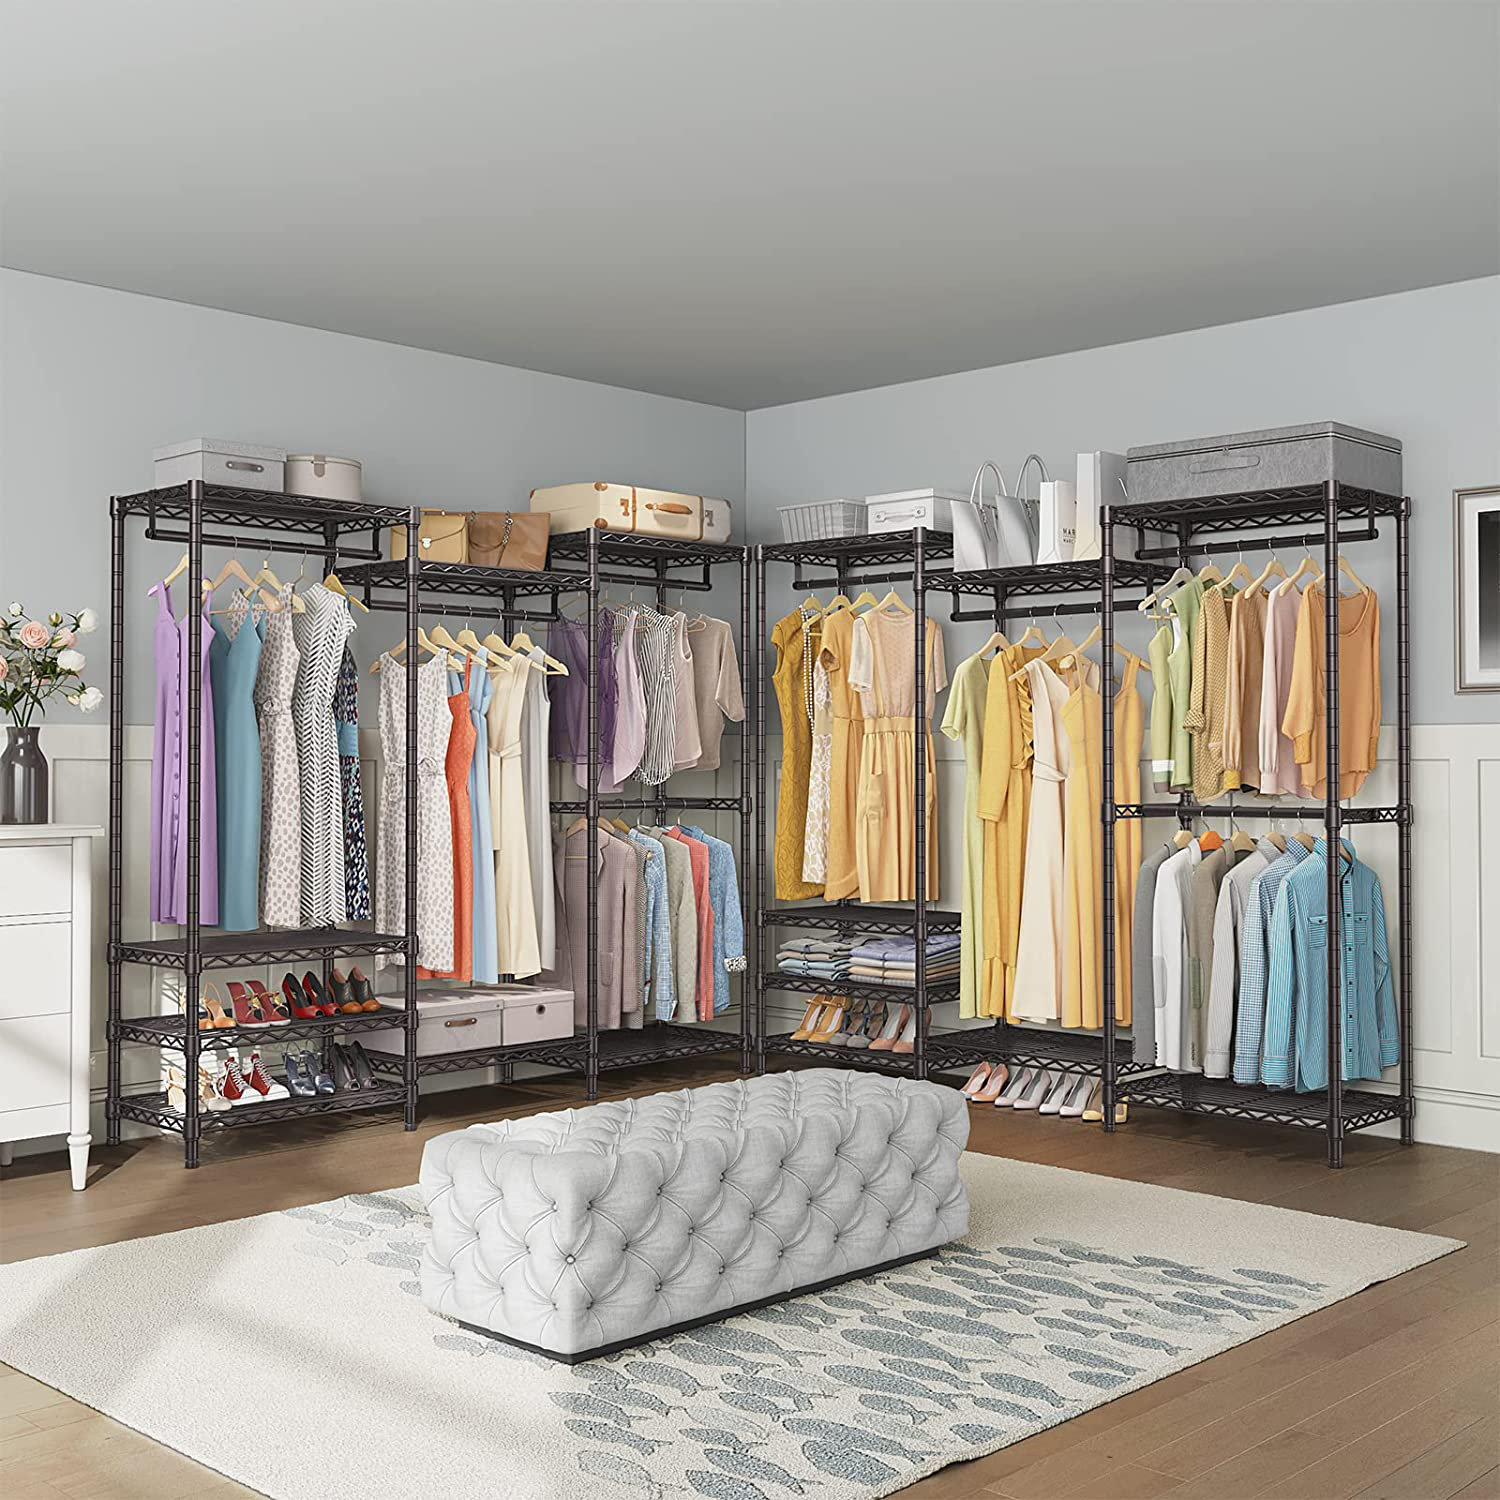 Bedroom Storage - Closet Systems & Storage Ideas